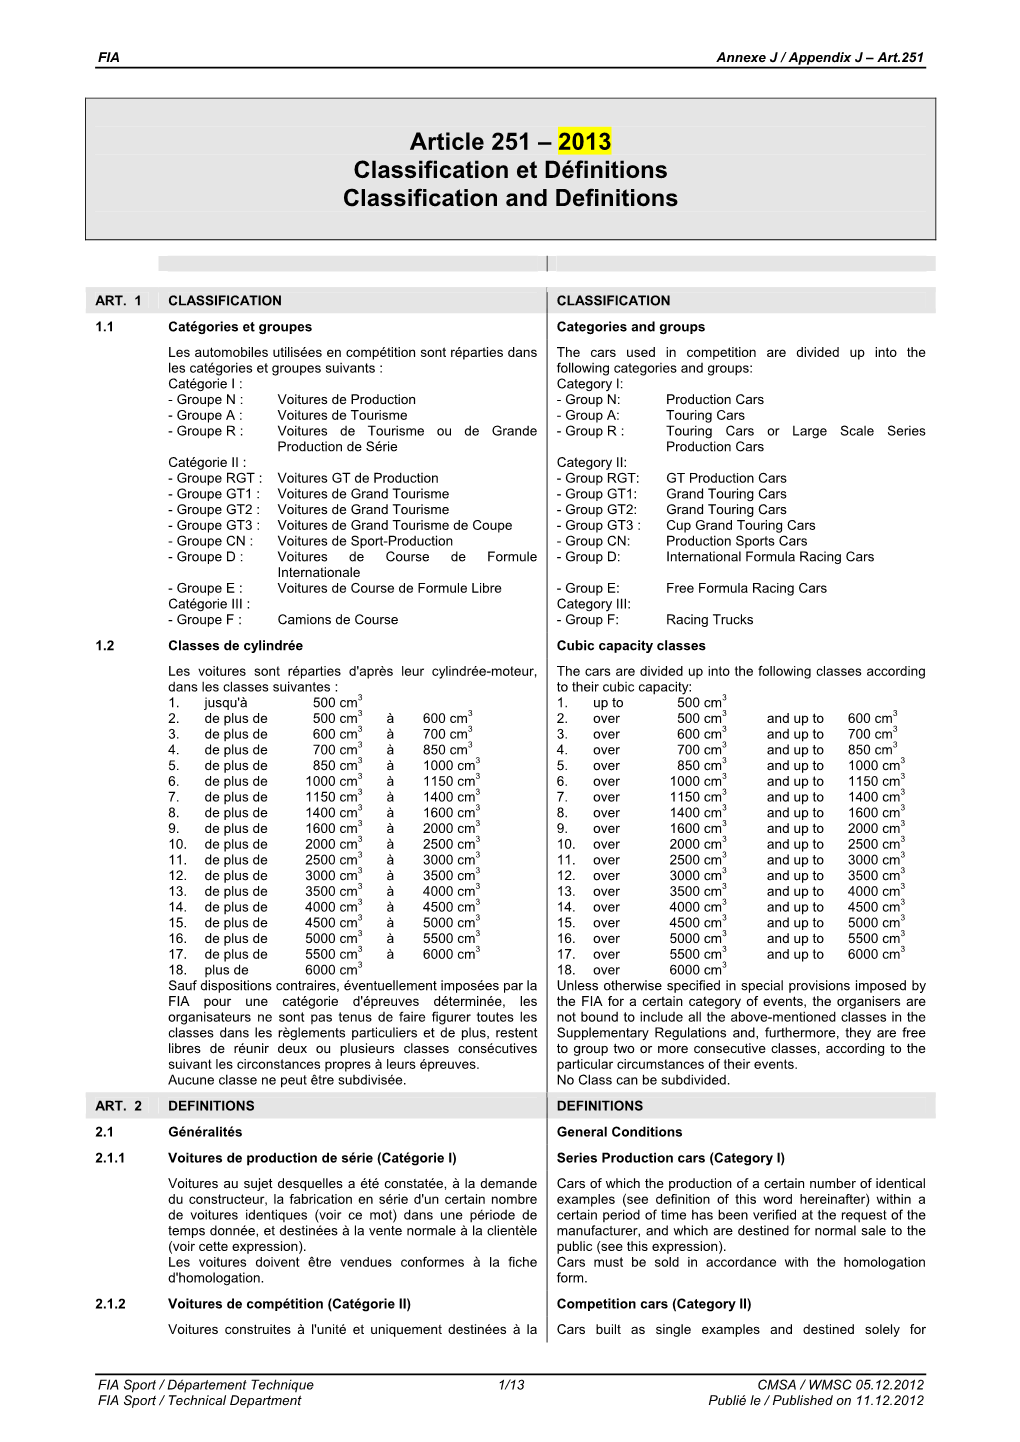 Article 251 – 2013 Classification Et Définitions Classification and Definitions